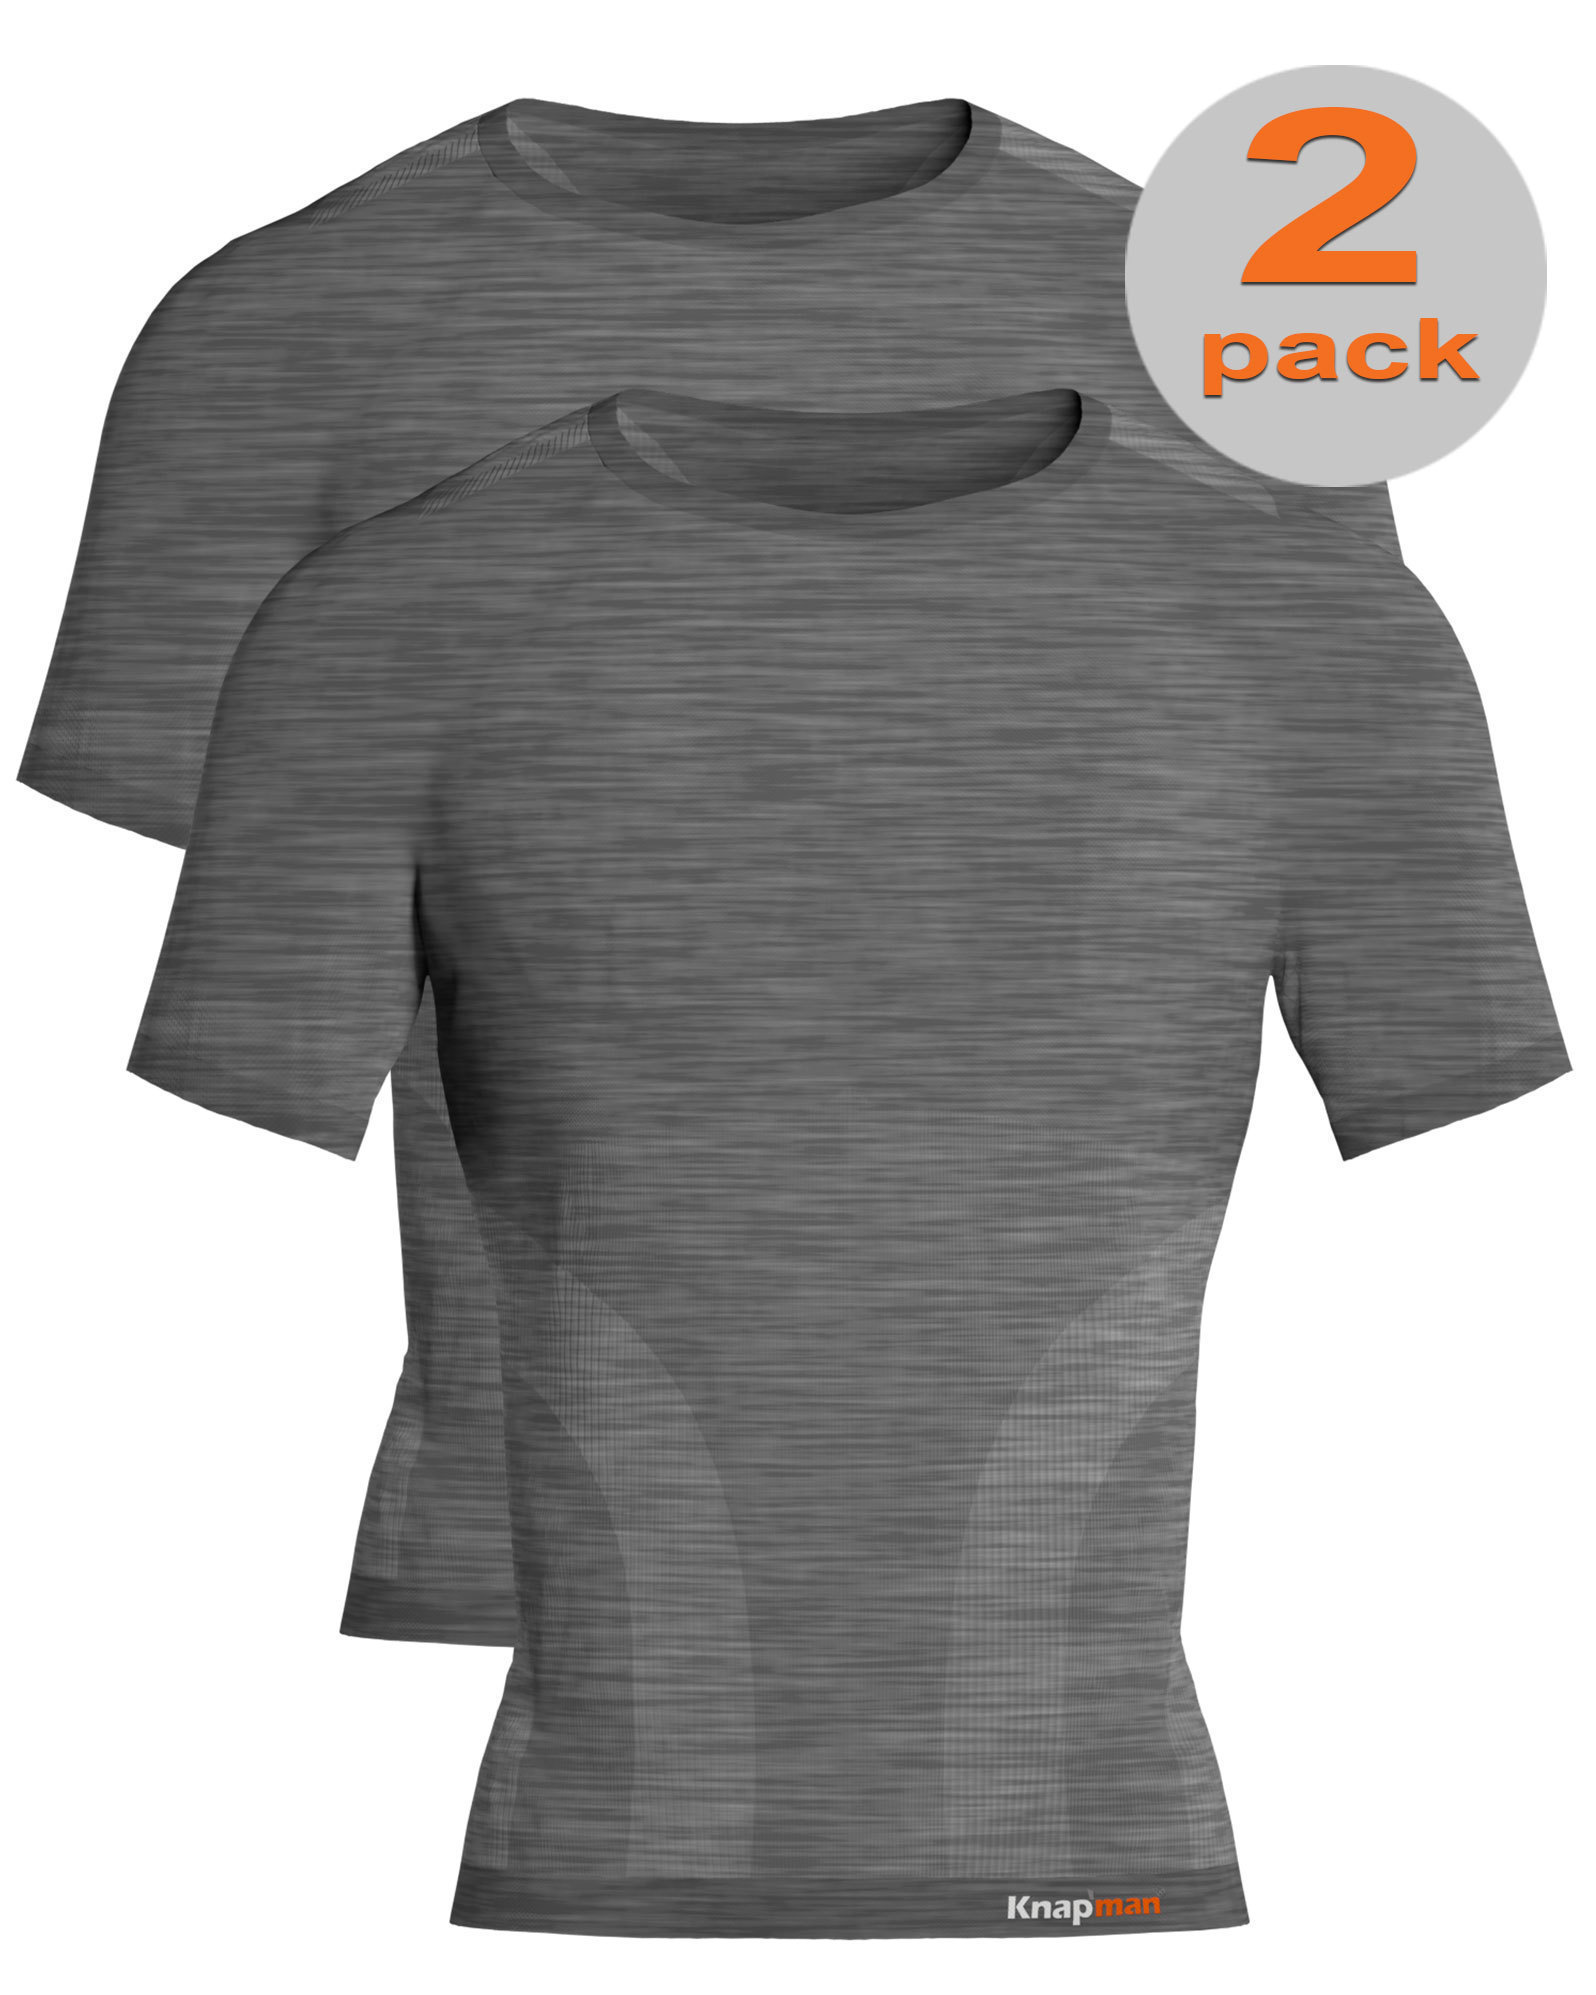 TWOPACK | Knapman Pro Performance Baselayer Shirt Short Sleeve Grey Melange